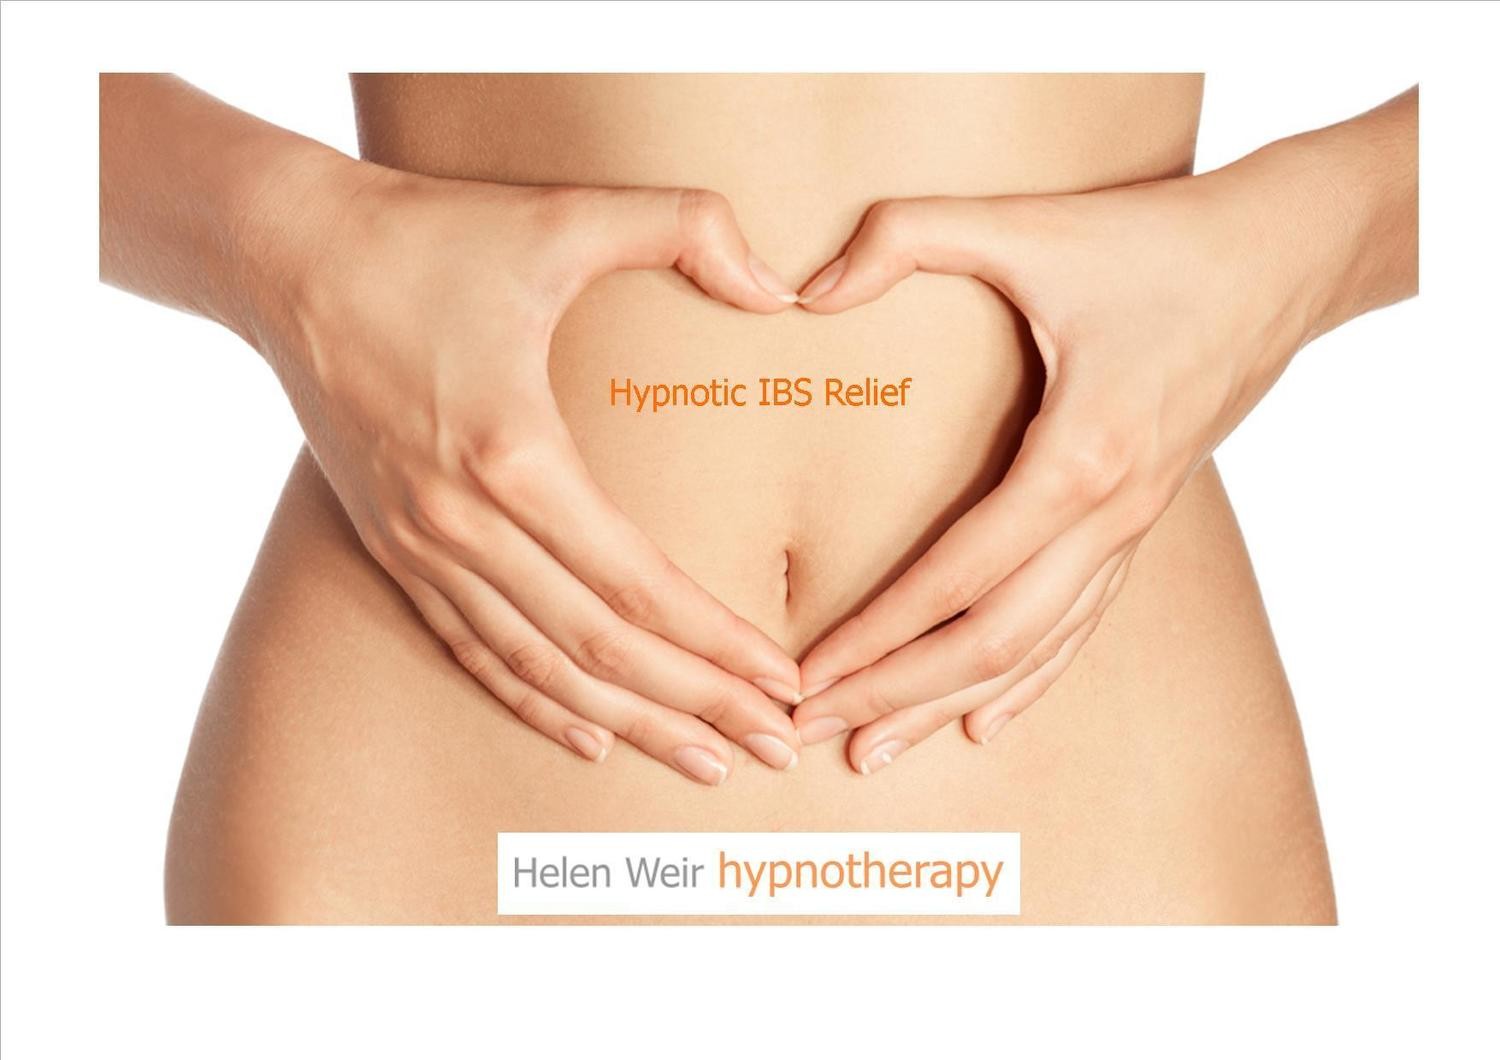 Hypnotic IBS Relief